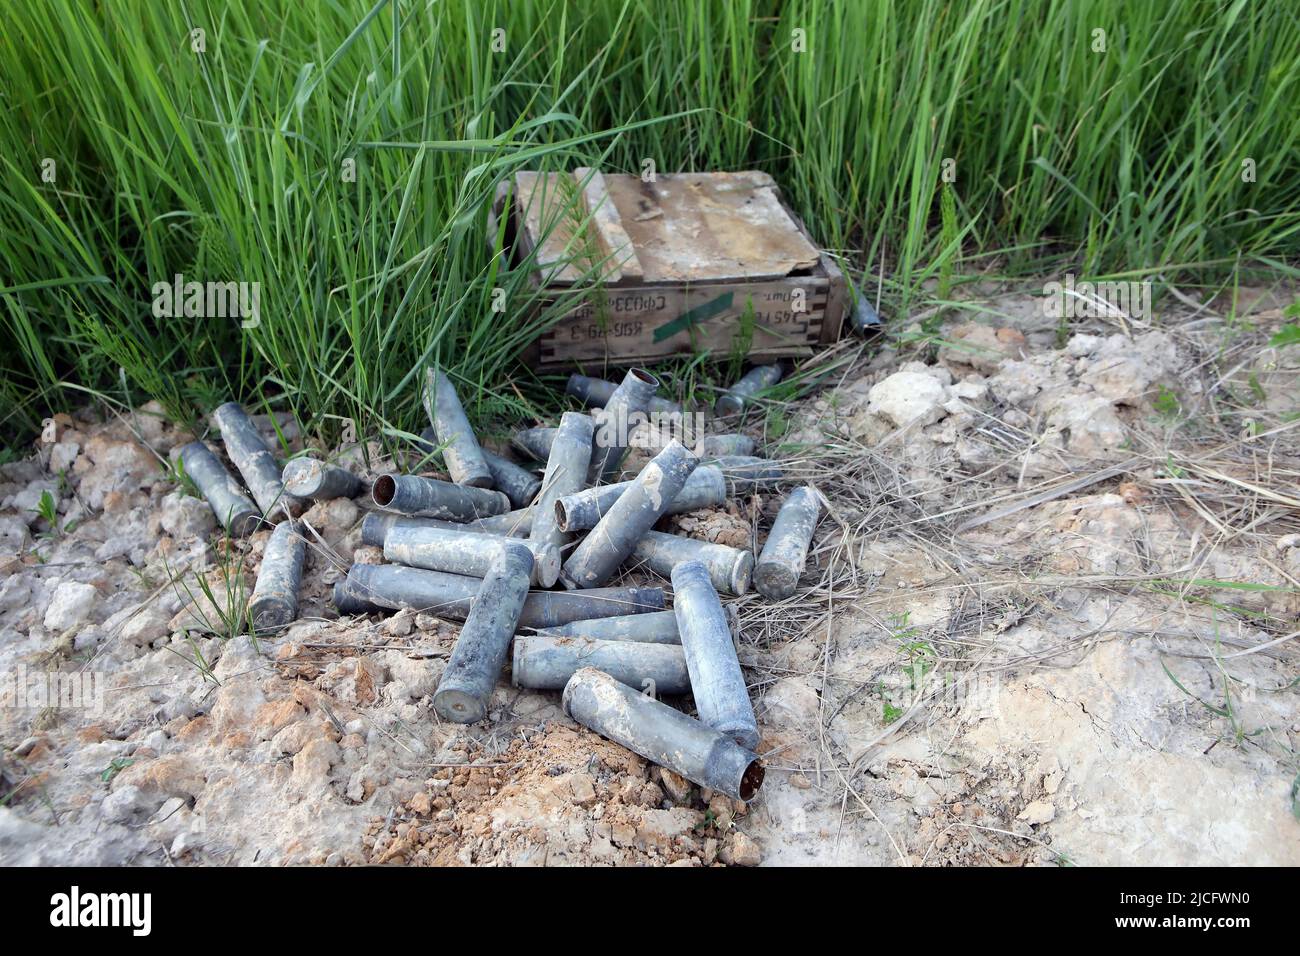 KYIV REGION, UKRAINE - JUNE 4, 2022 - Cartridge cases cover the ground next to an ammunition box on the outskirts of Vovchkiv village where the Ukrain Stock Photo